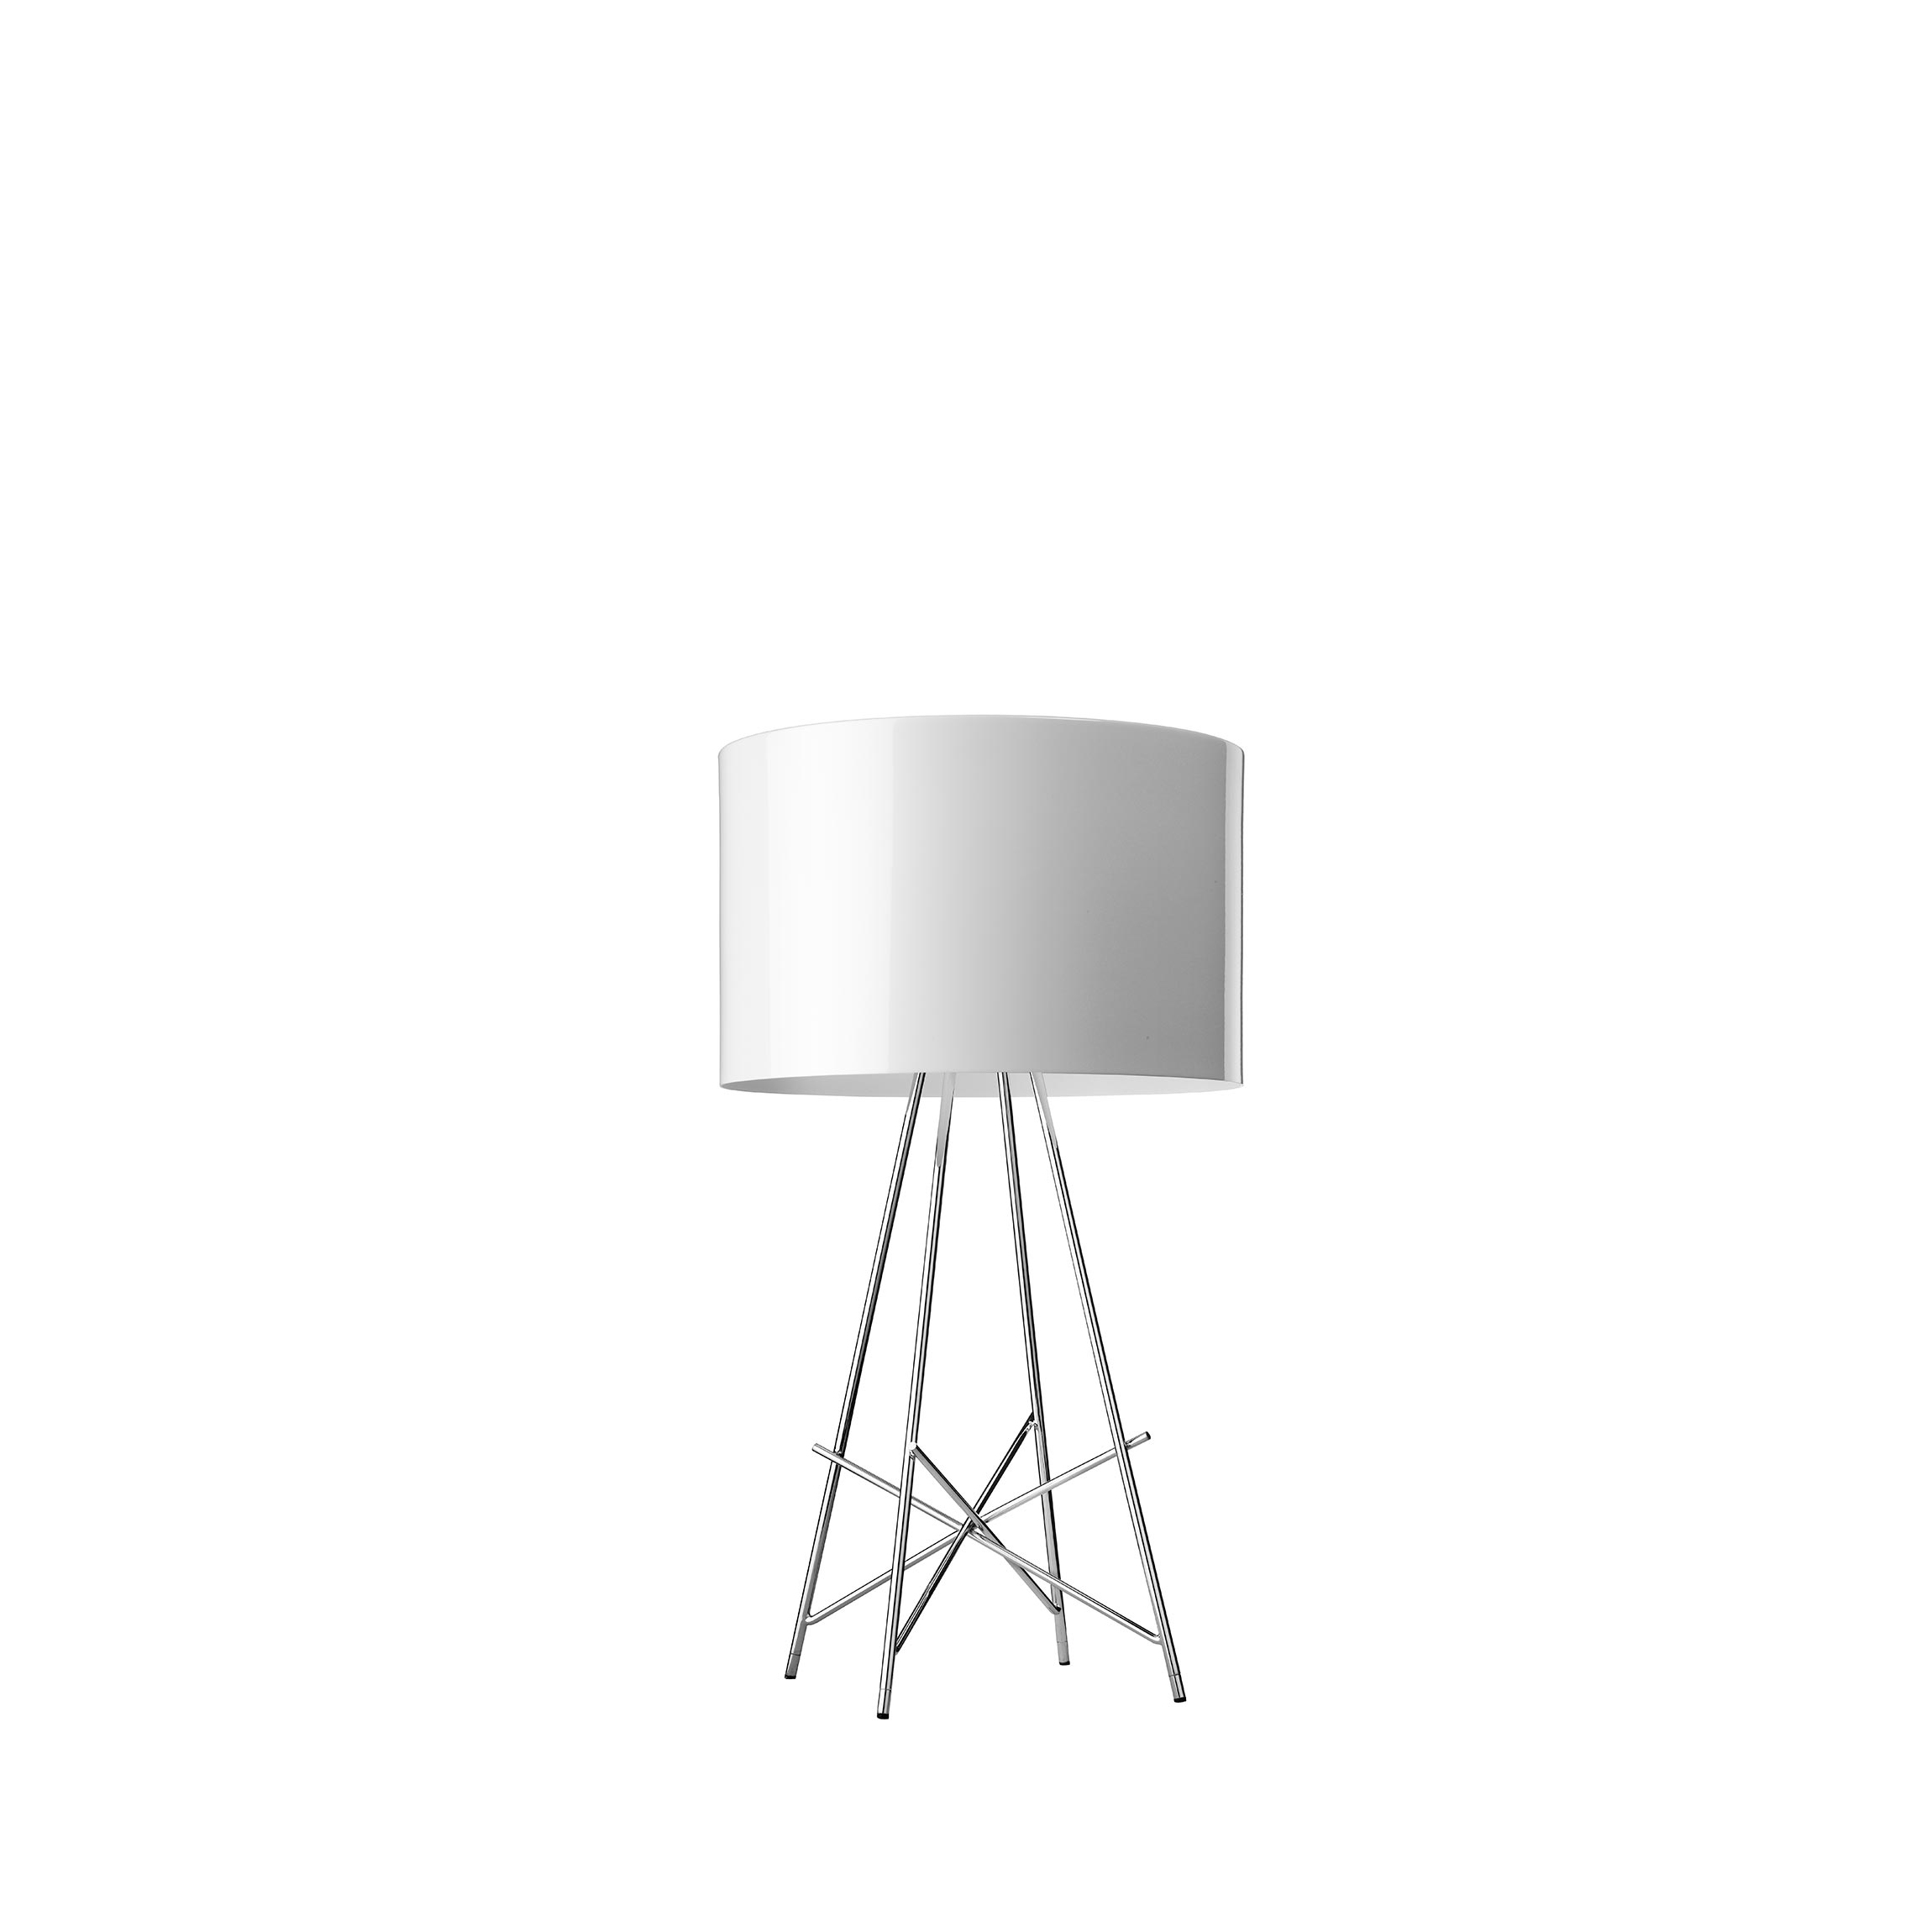 ray-table-dordoni-flos-F5911009-product-still-life-big.jpg